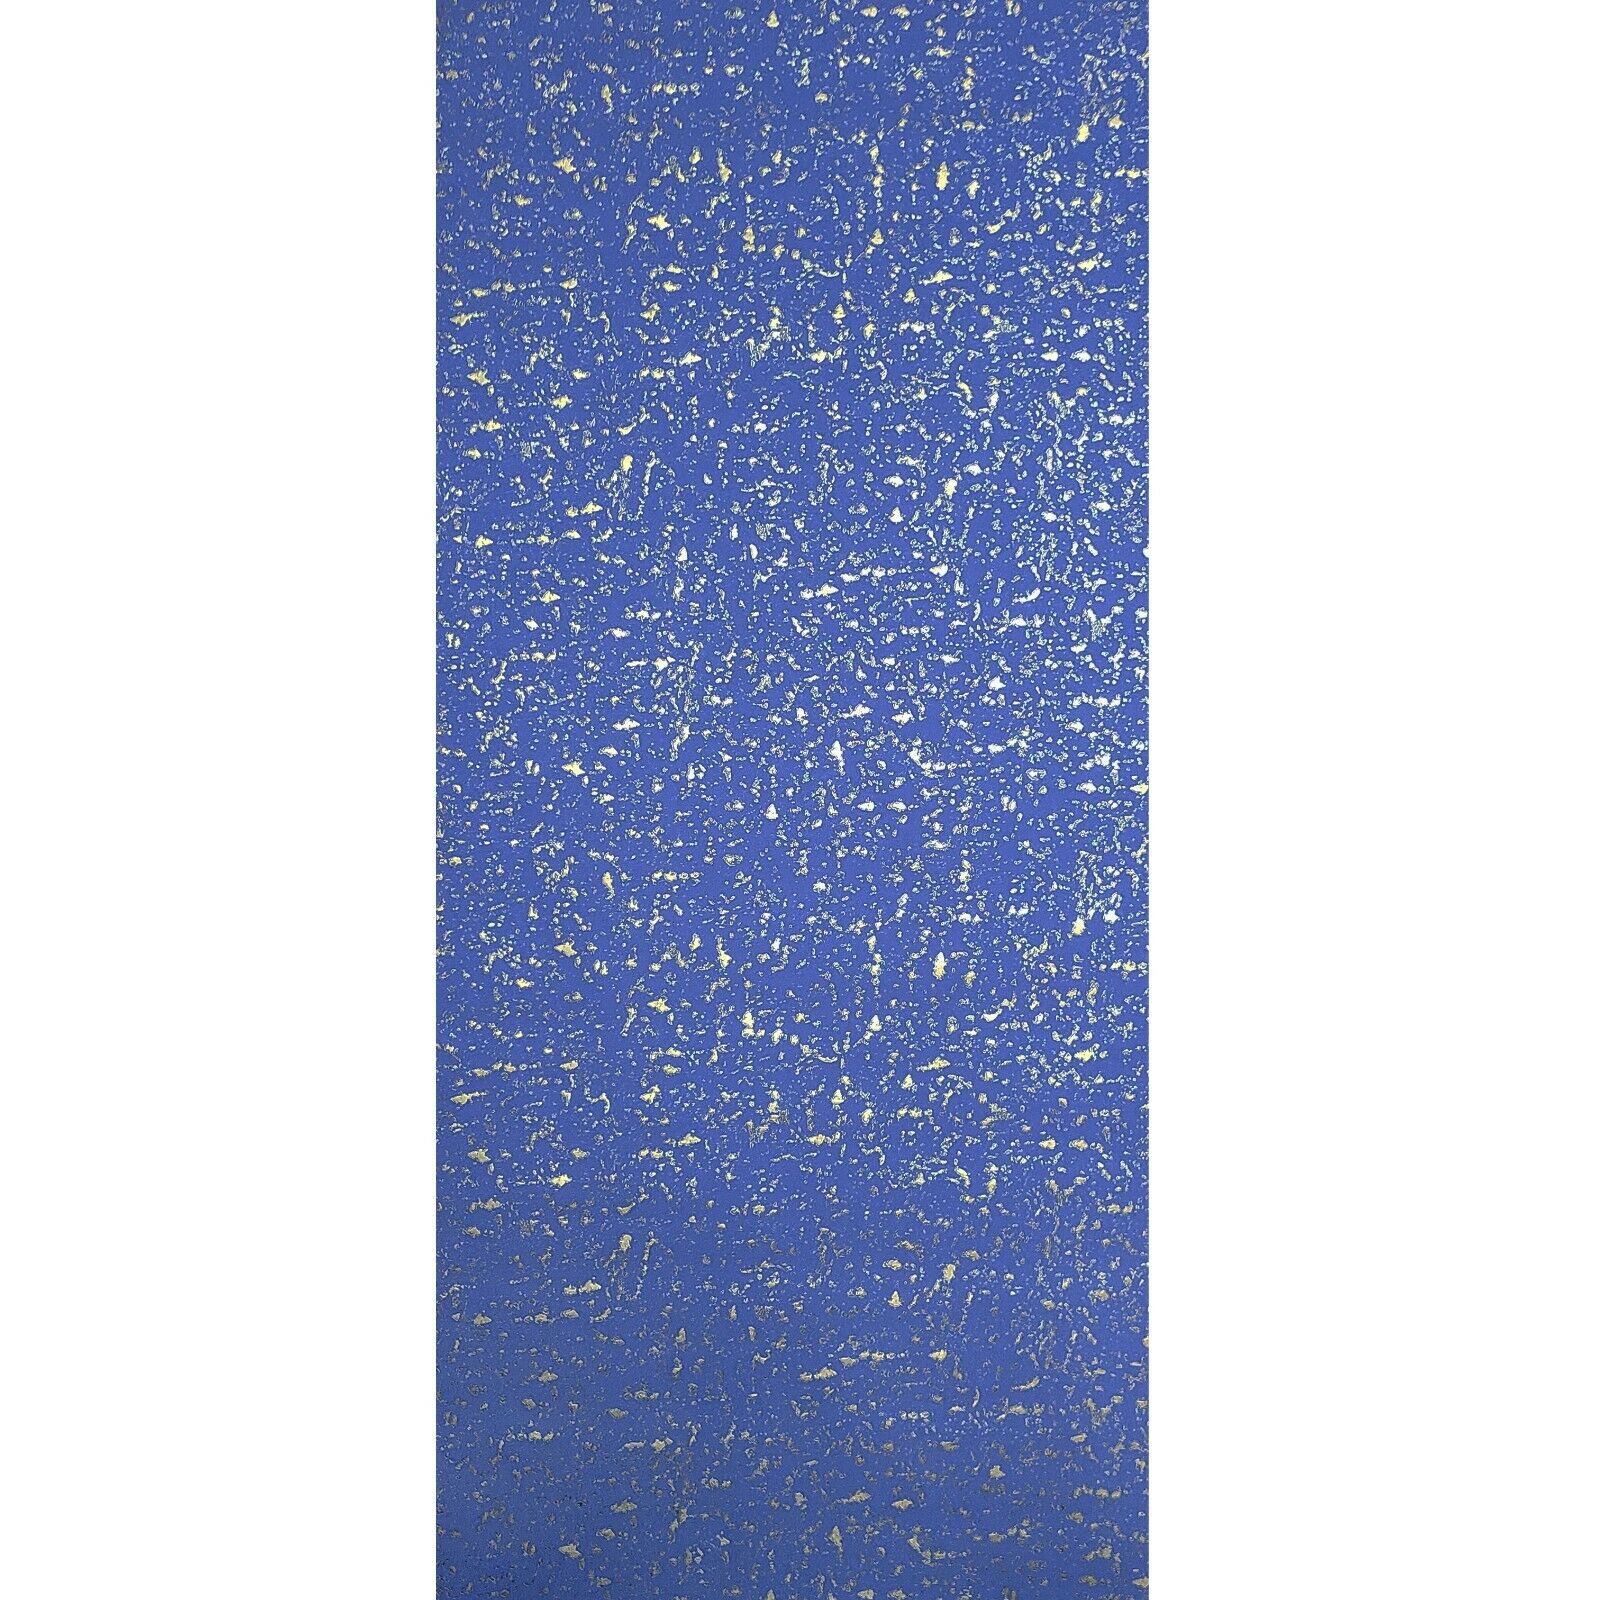 100+] Blue Glitter Backgrounds